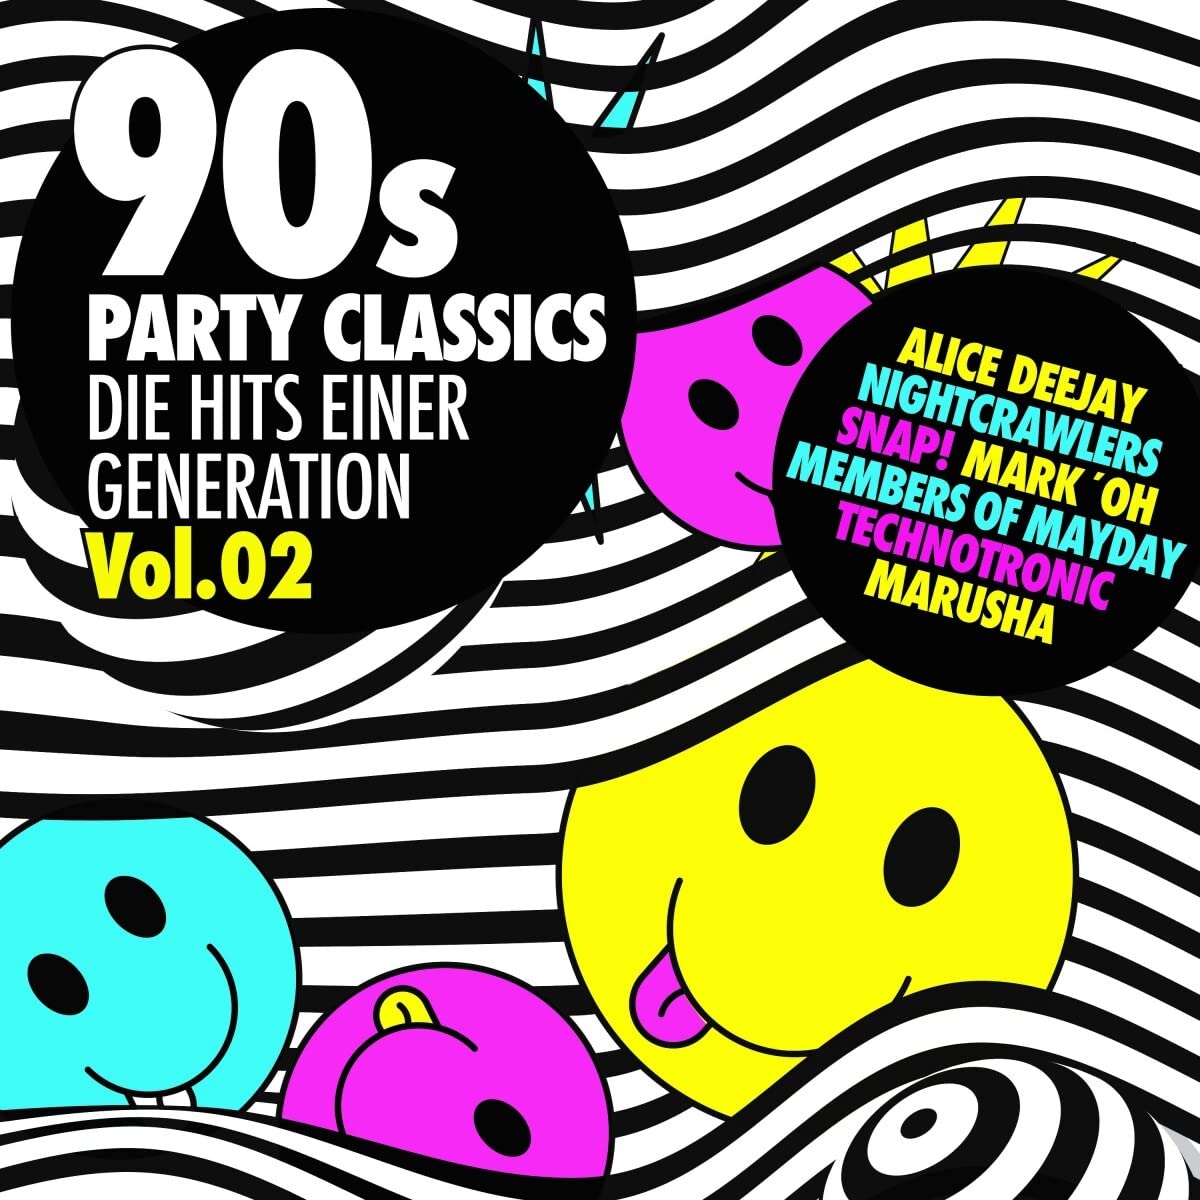 90s Party Classics Vol. 2 - Hits Einer Generation